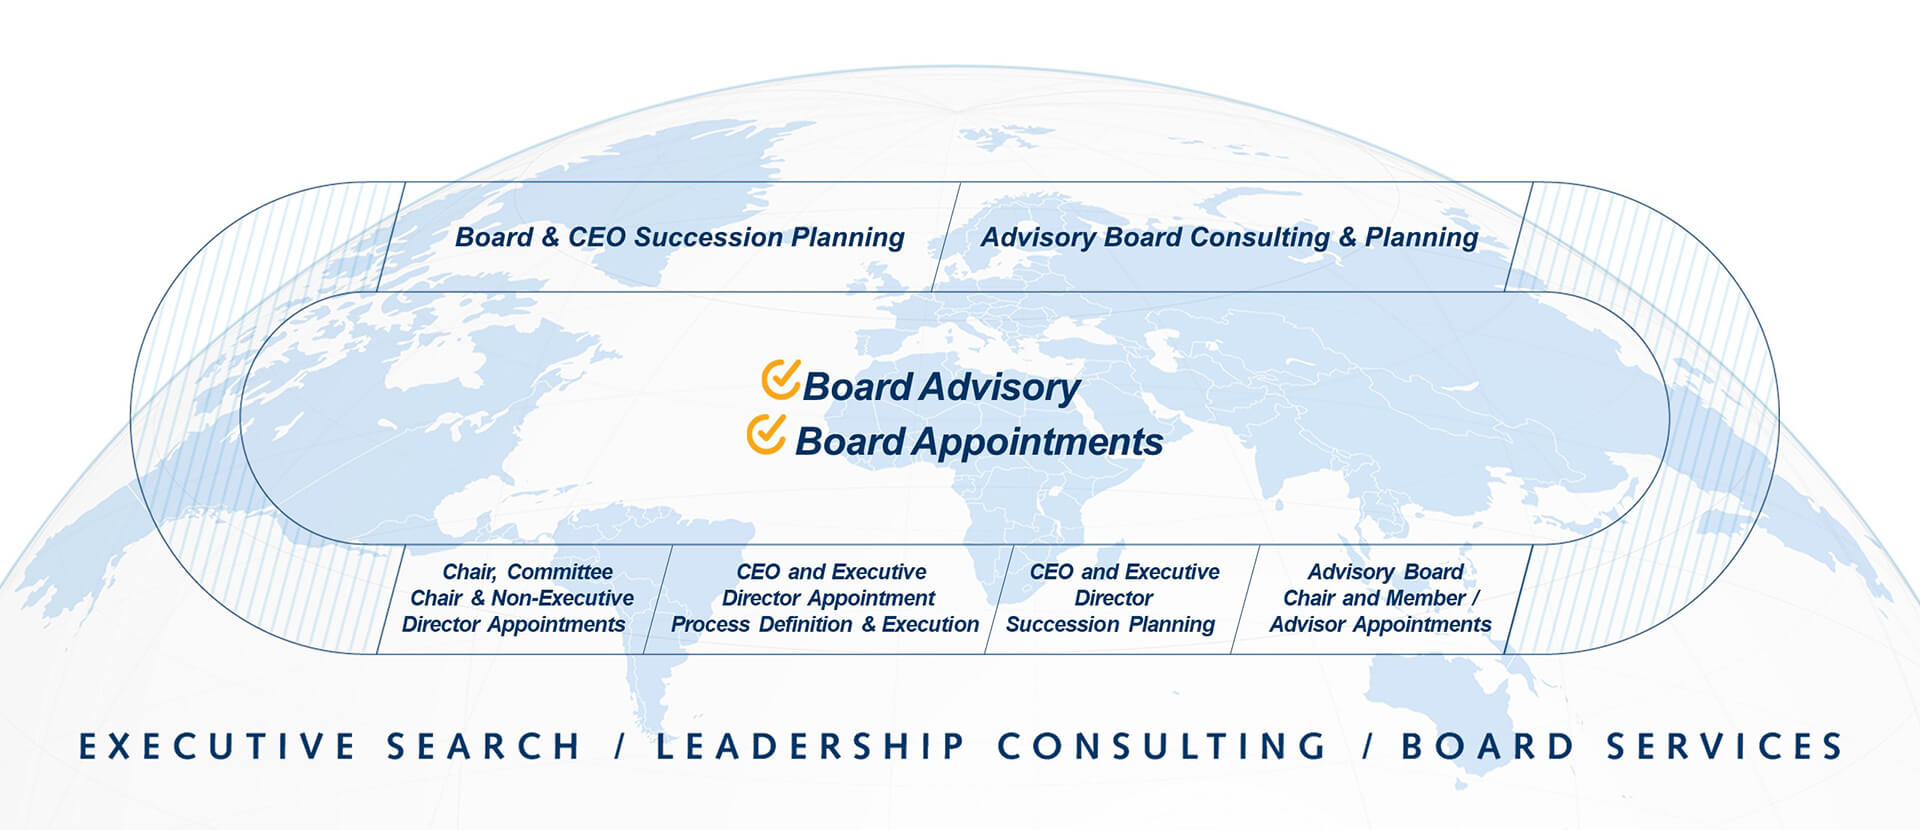 Pedersen & Partners Practice Group Board Services